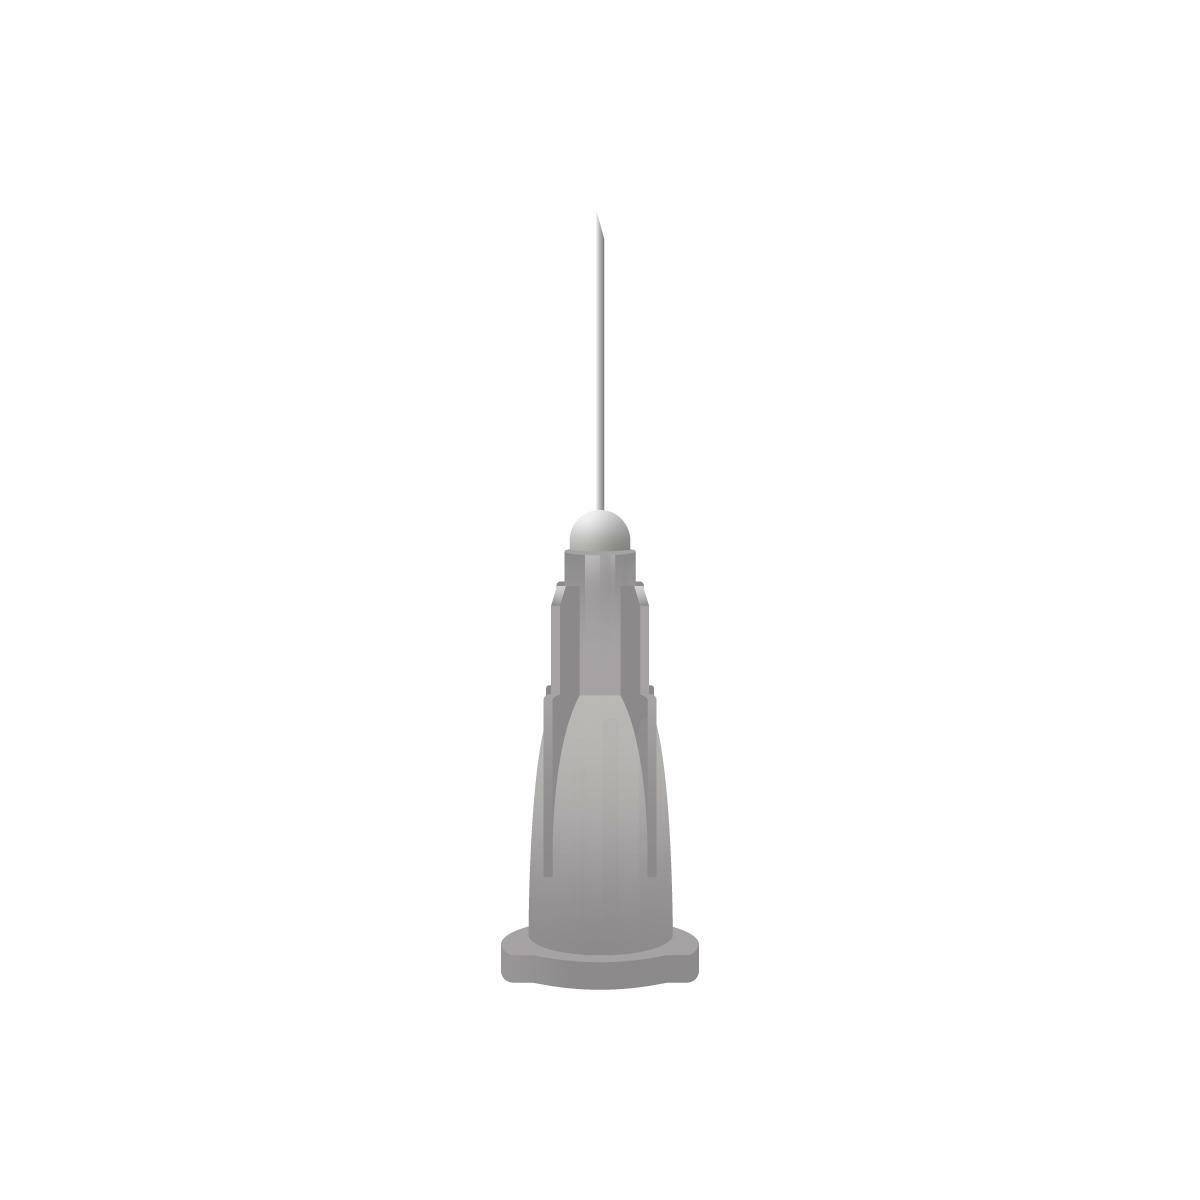 27g Grey 0.5 inch Unisharp Needles (13mm x 0.4mm)